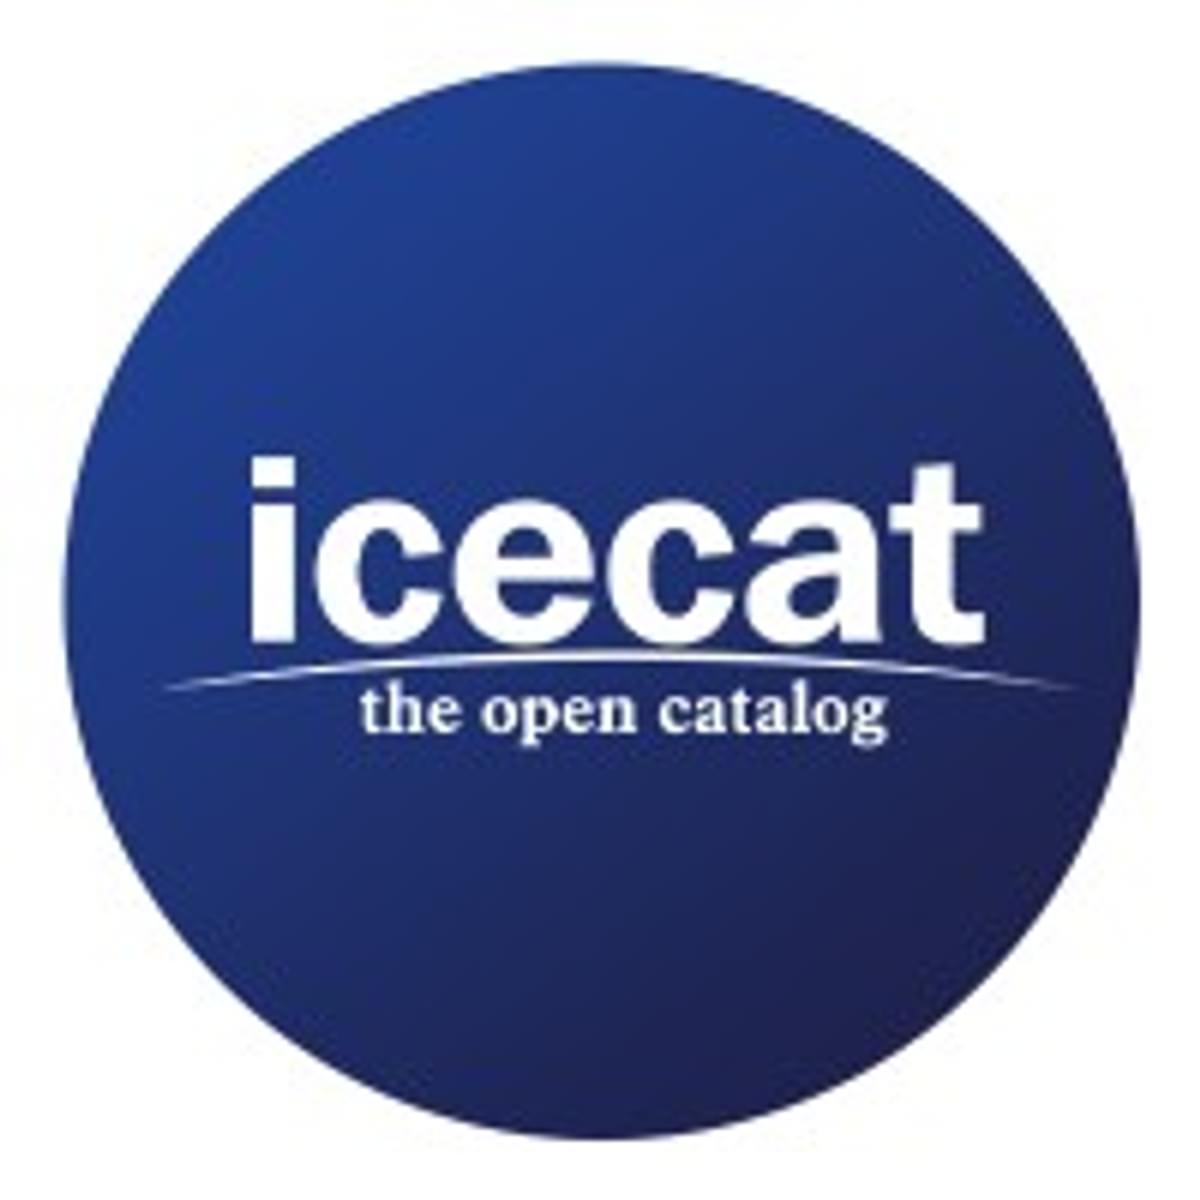 Icecat groeit maar kosten oorlog Oekraïne drukken winstgroei. image